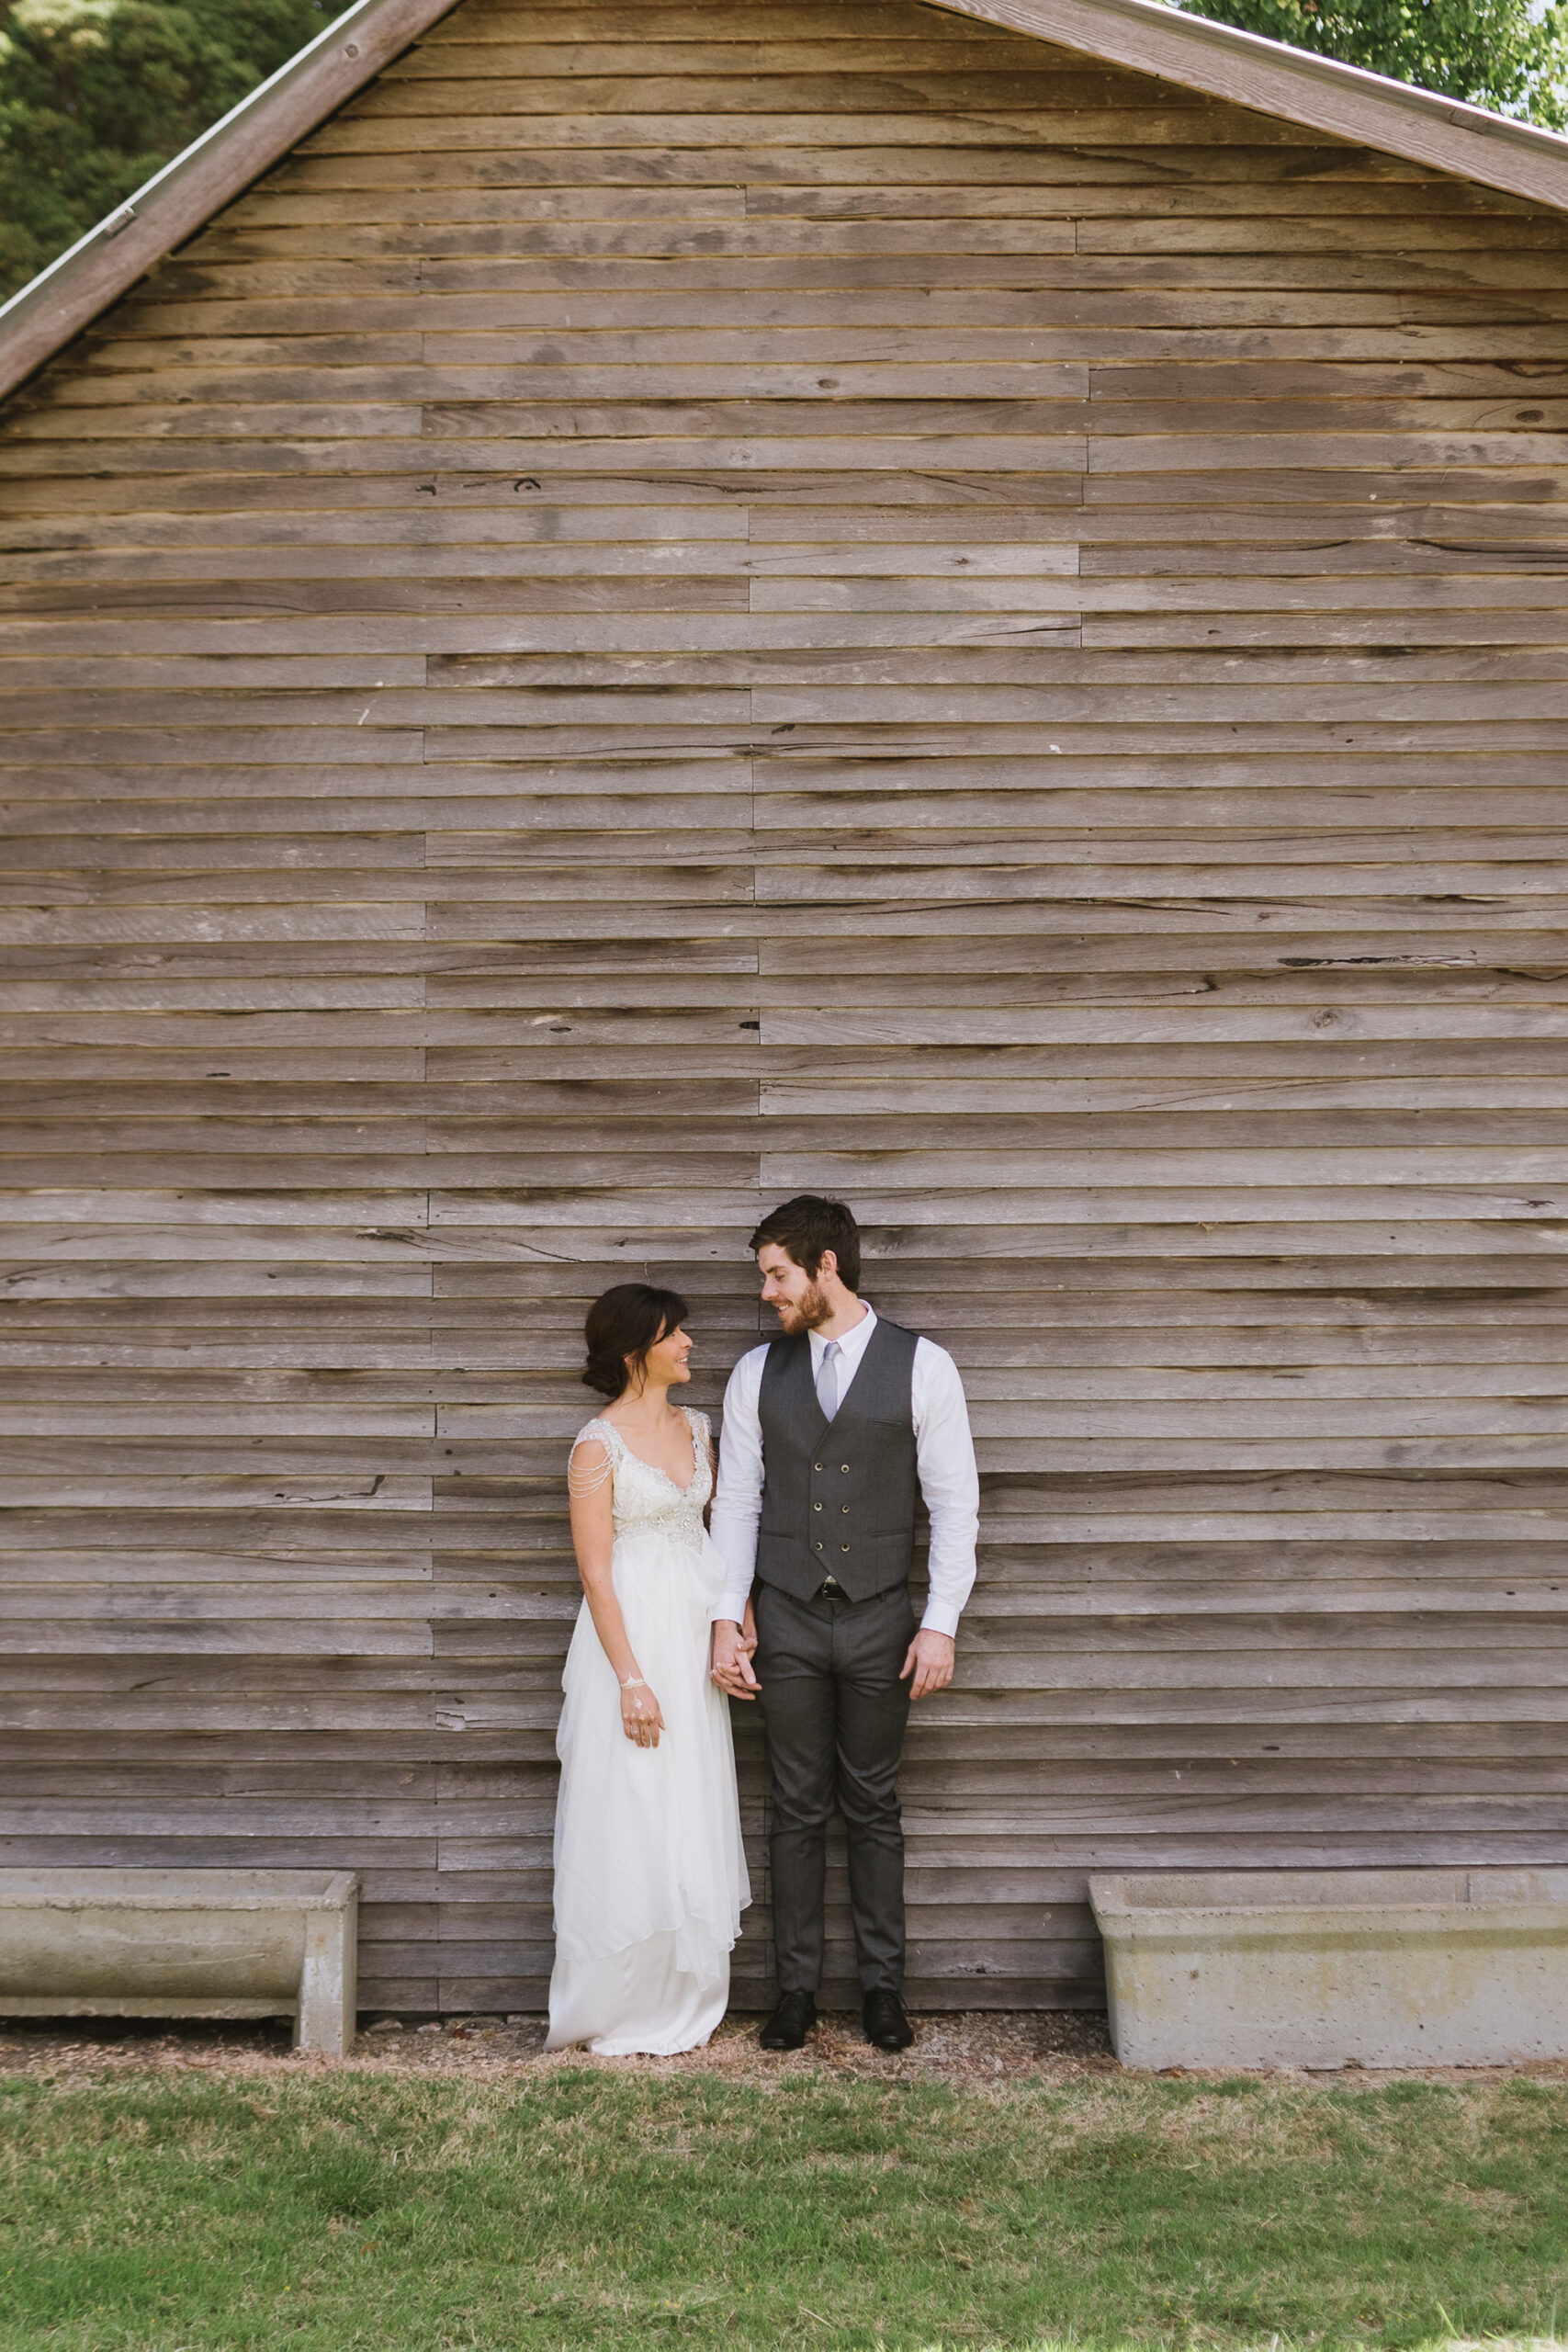 Laura_Daniel_Country-Rustic-Wedding_Nicholas-Joel-Photography_SBS_015